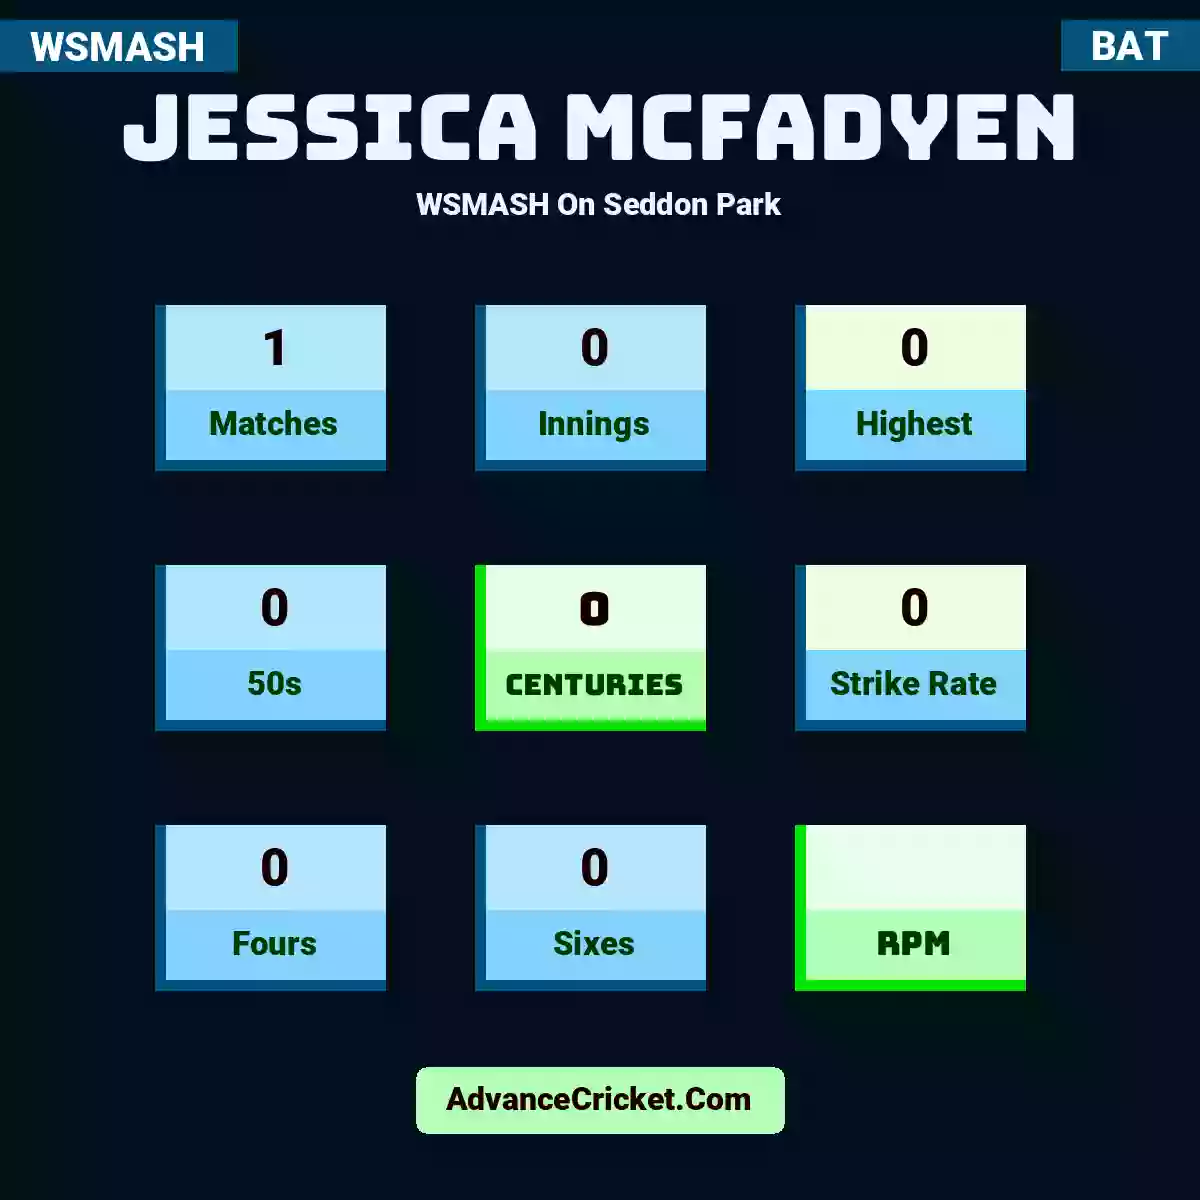 Jessica McFadyen WSMASH  On Seddon Park, Jessica McFadyen played 1 matches, scored 0 runs as highest, 0 half-centuries, and 0 centuries, with a strike rate of 0. J.McFadyen hit 0 fours and 0 sixes.